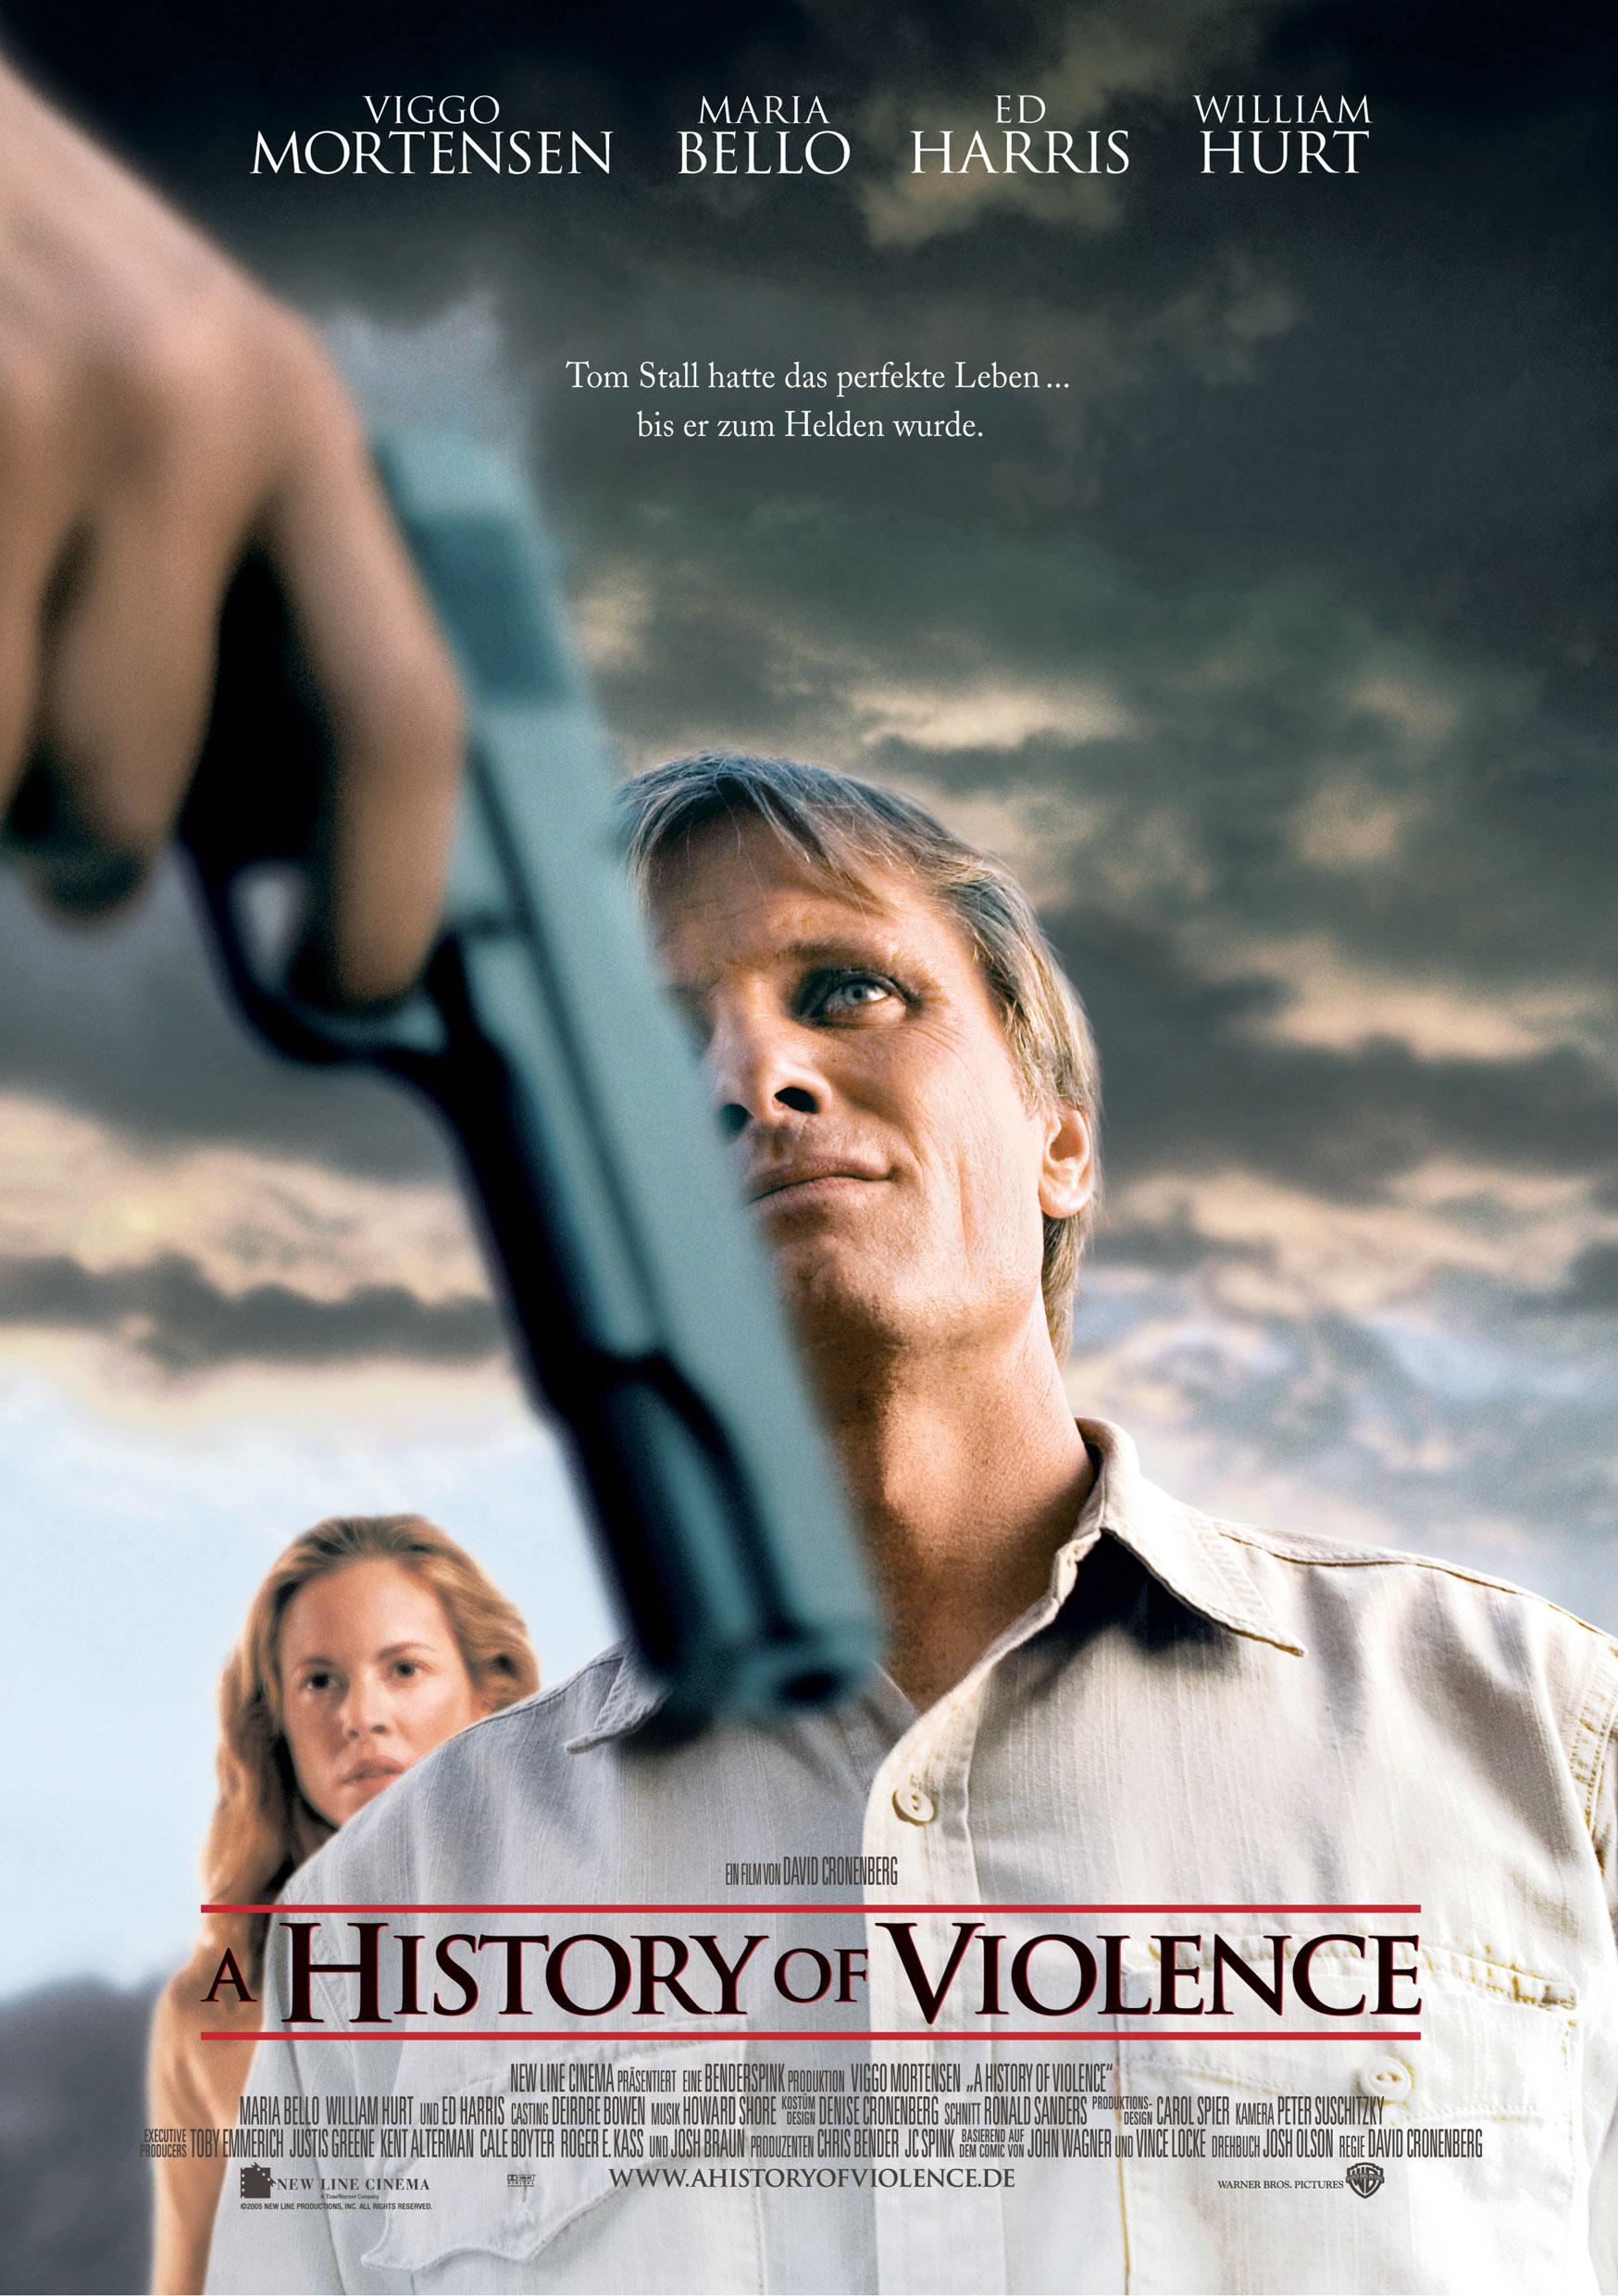 The Hunted (1995 film) - Wikipedia